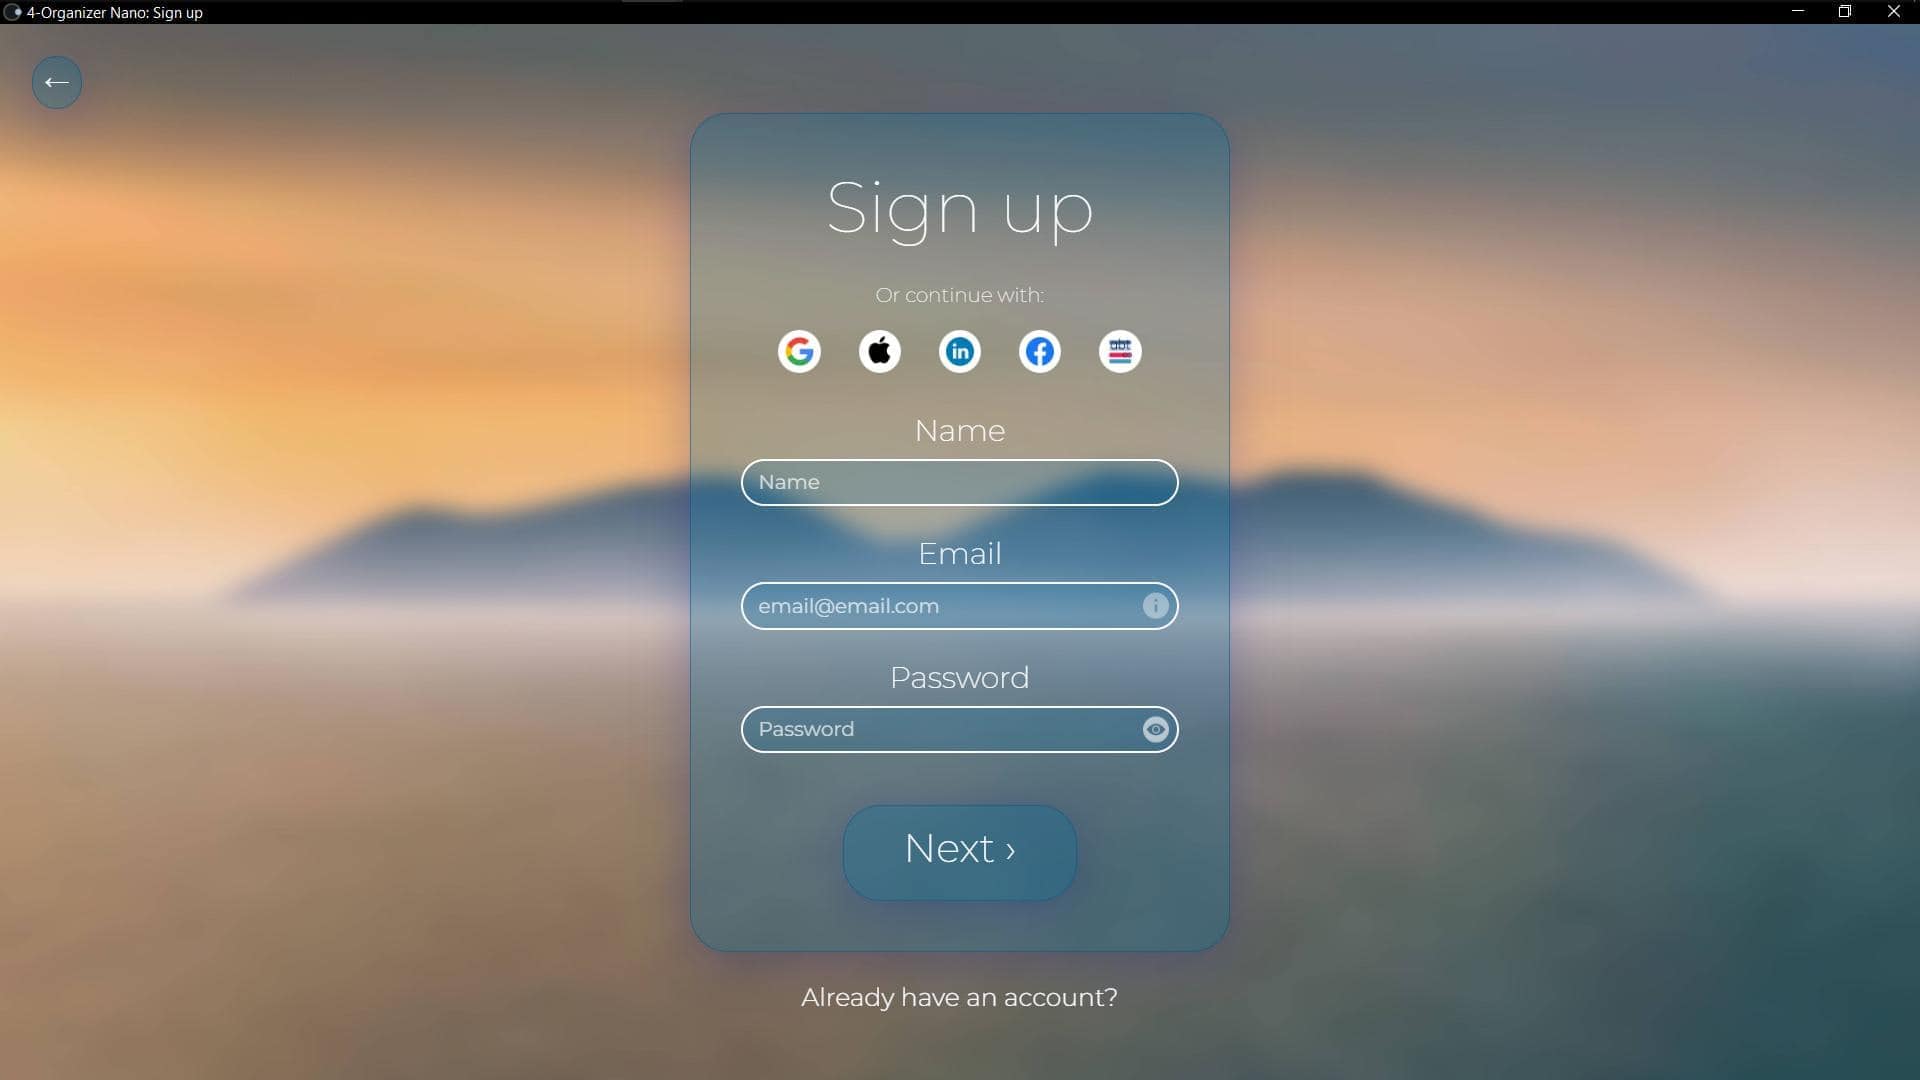 Screenshot of 'Sign up' window of 4-Organizer Nano